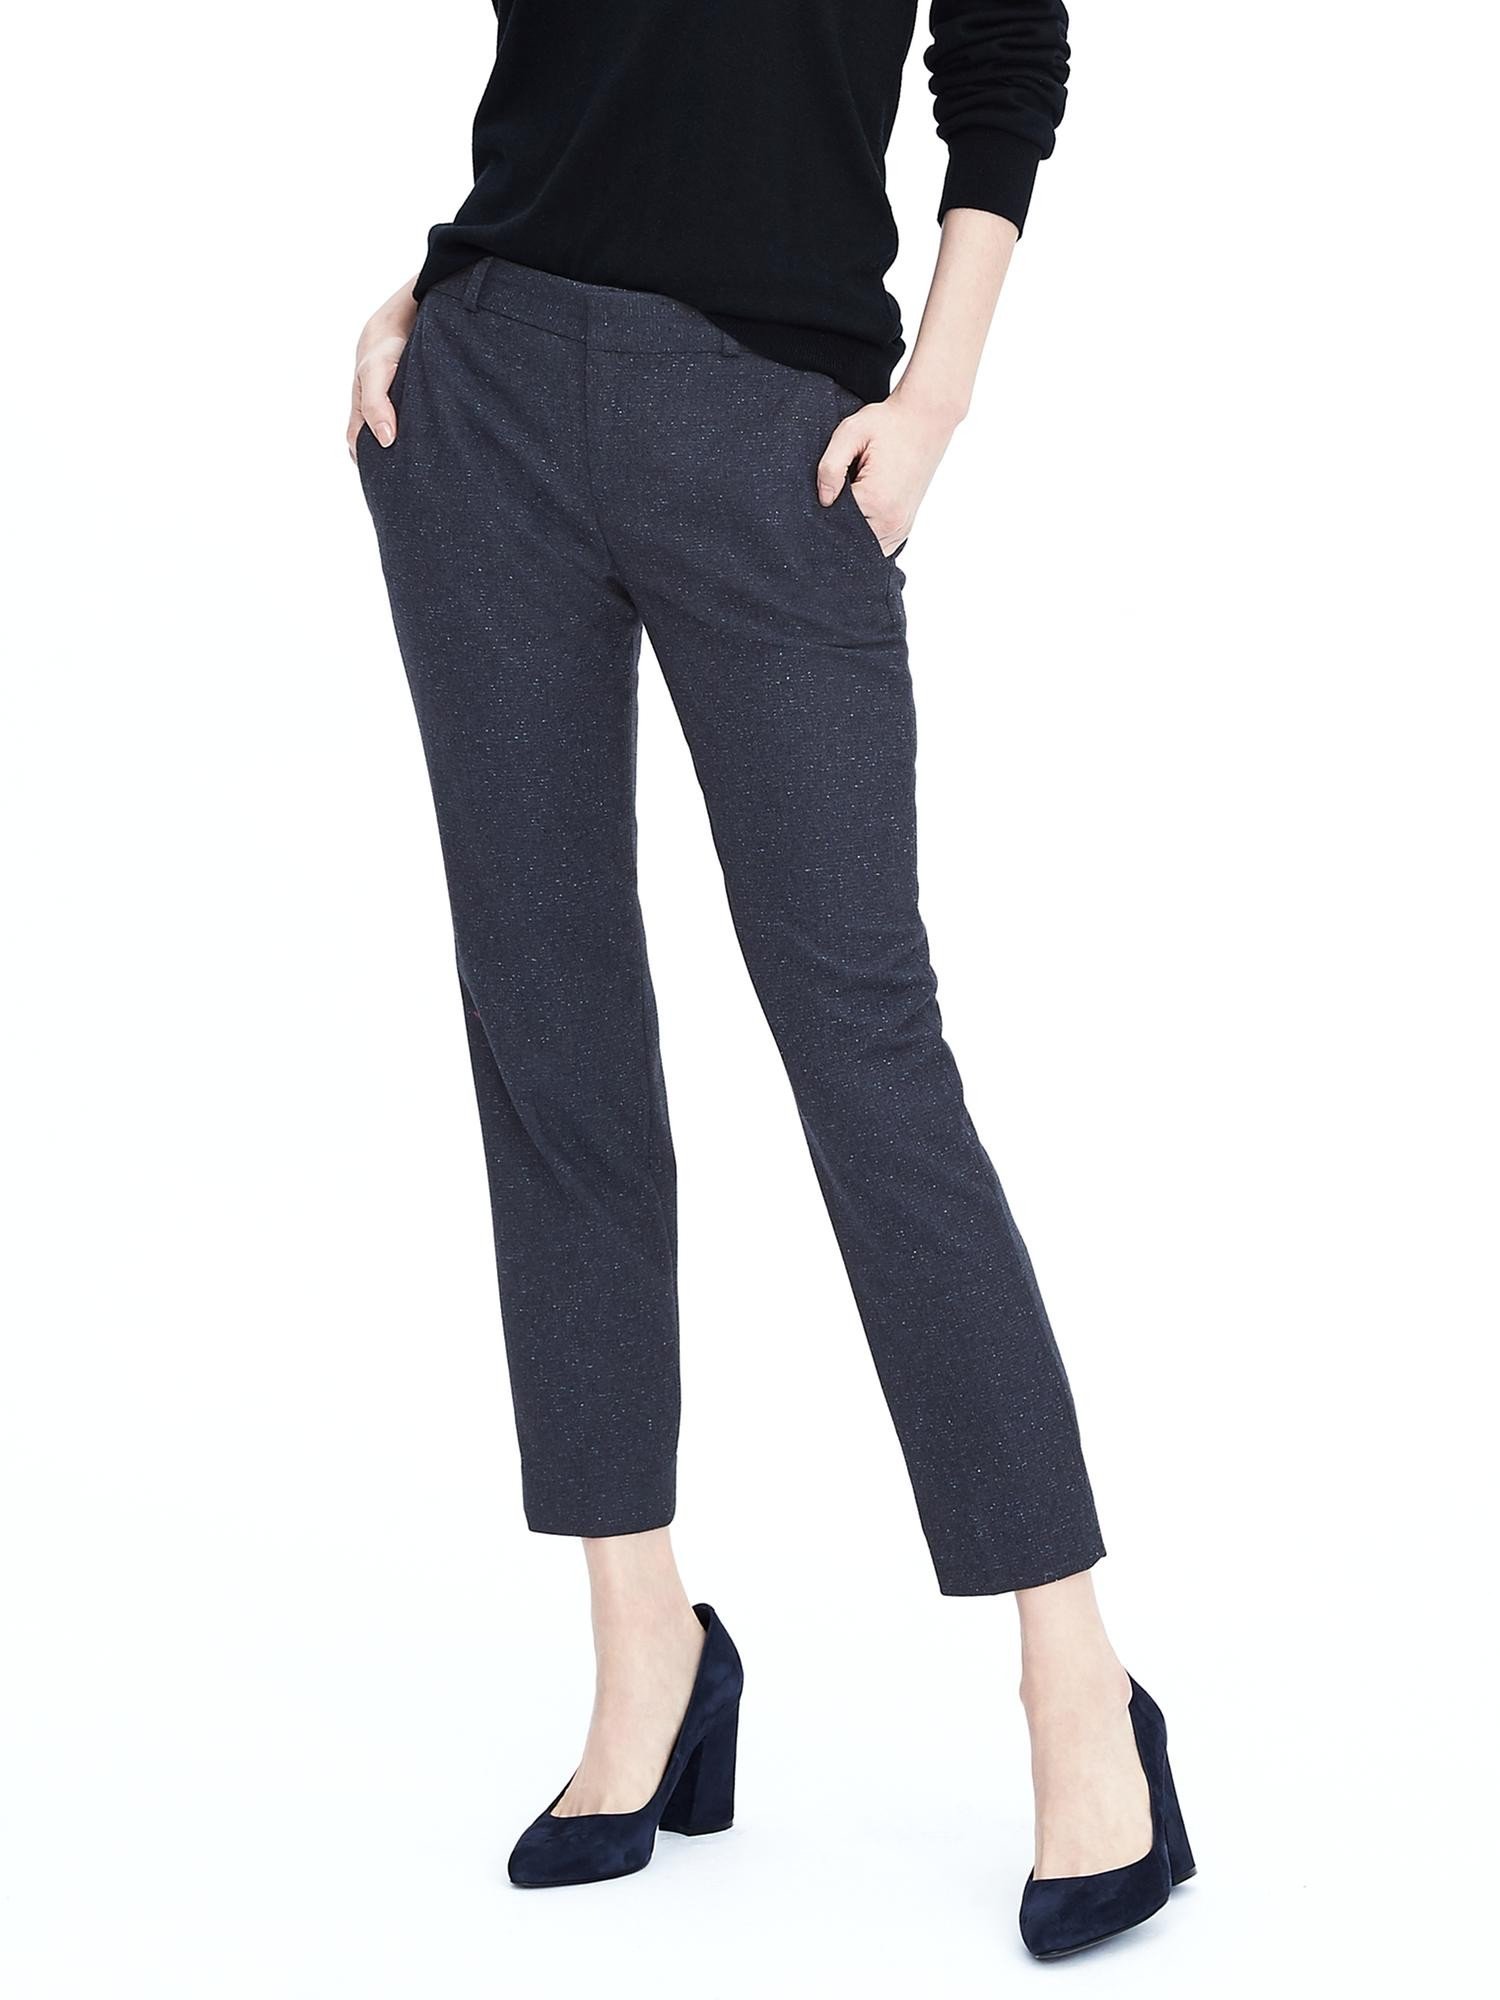 Avery-Fit yün karışımlı kumaş pantolon product image